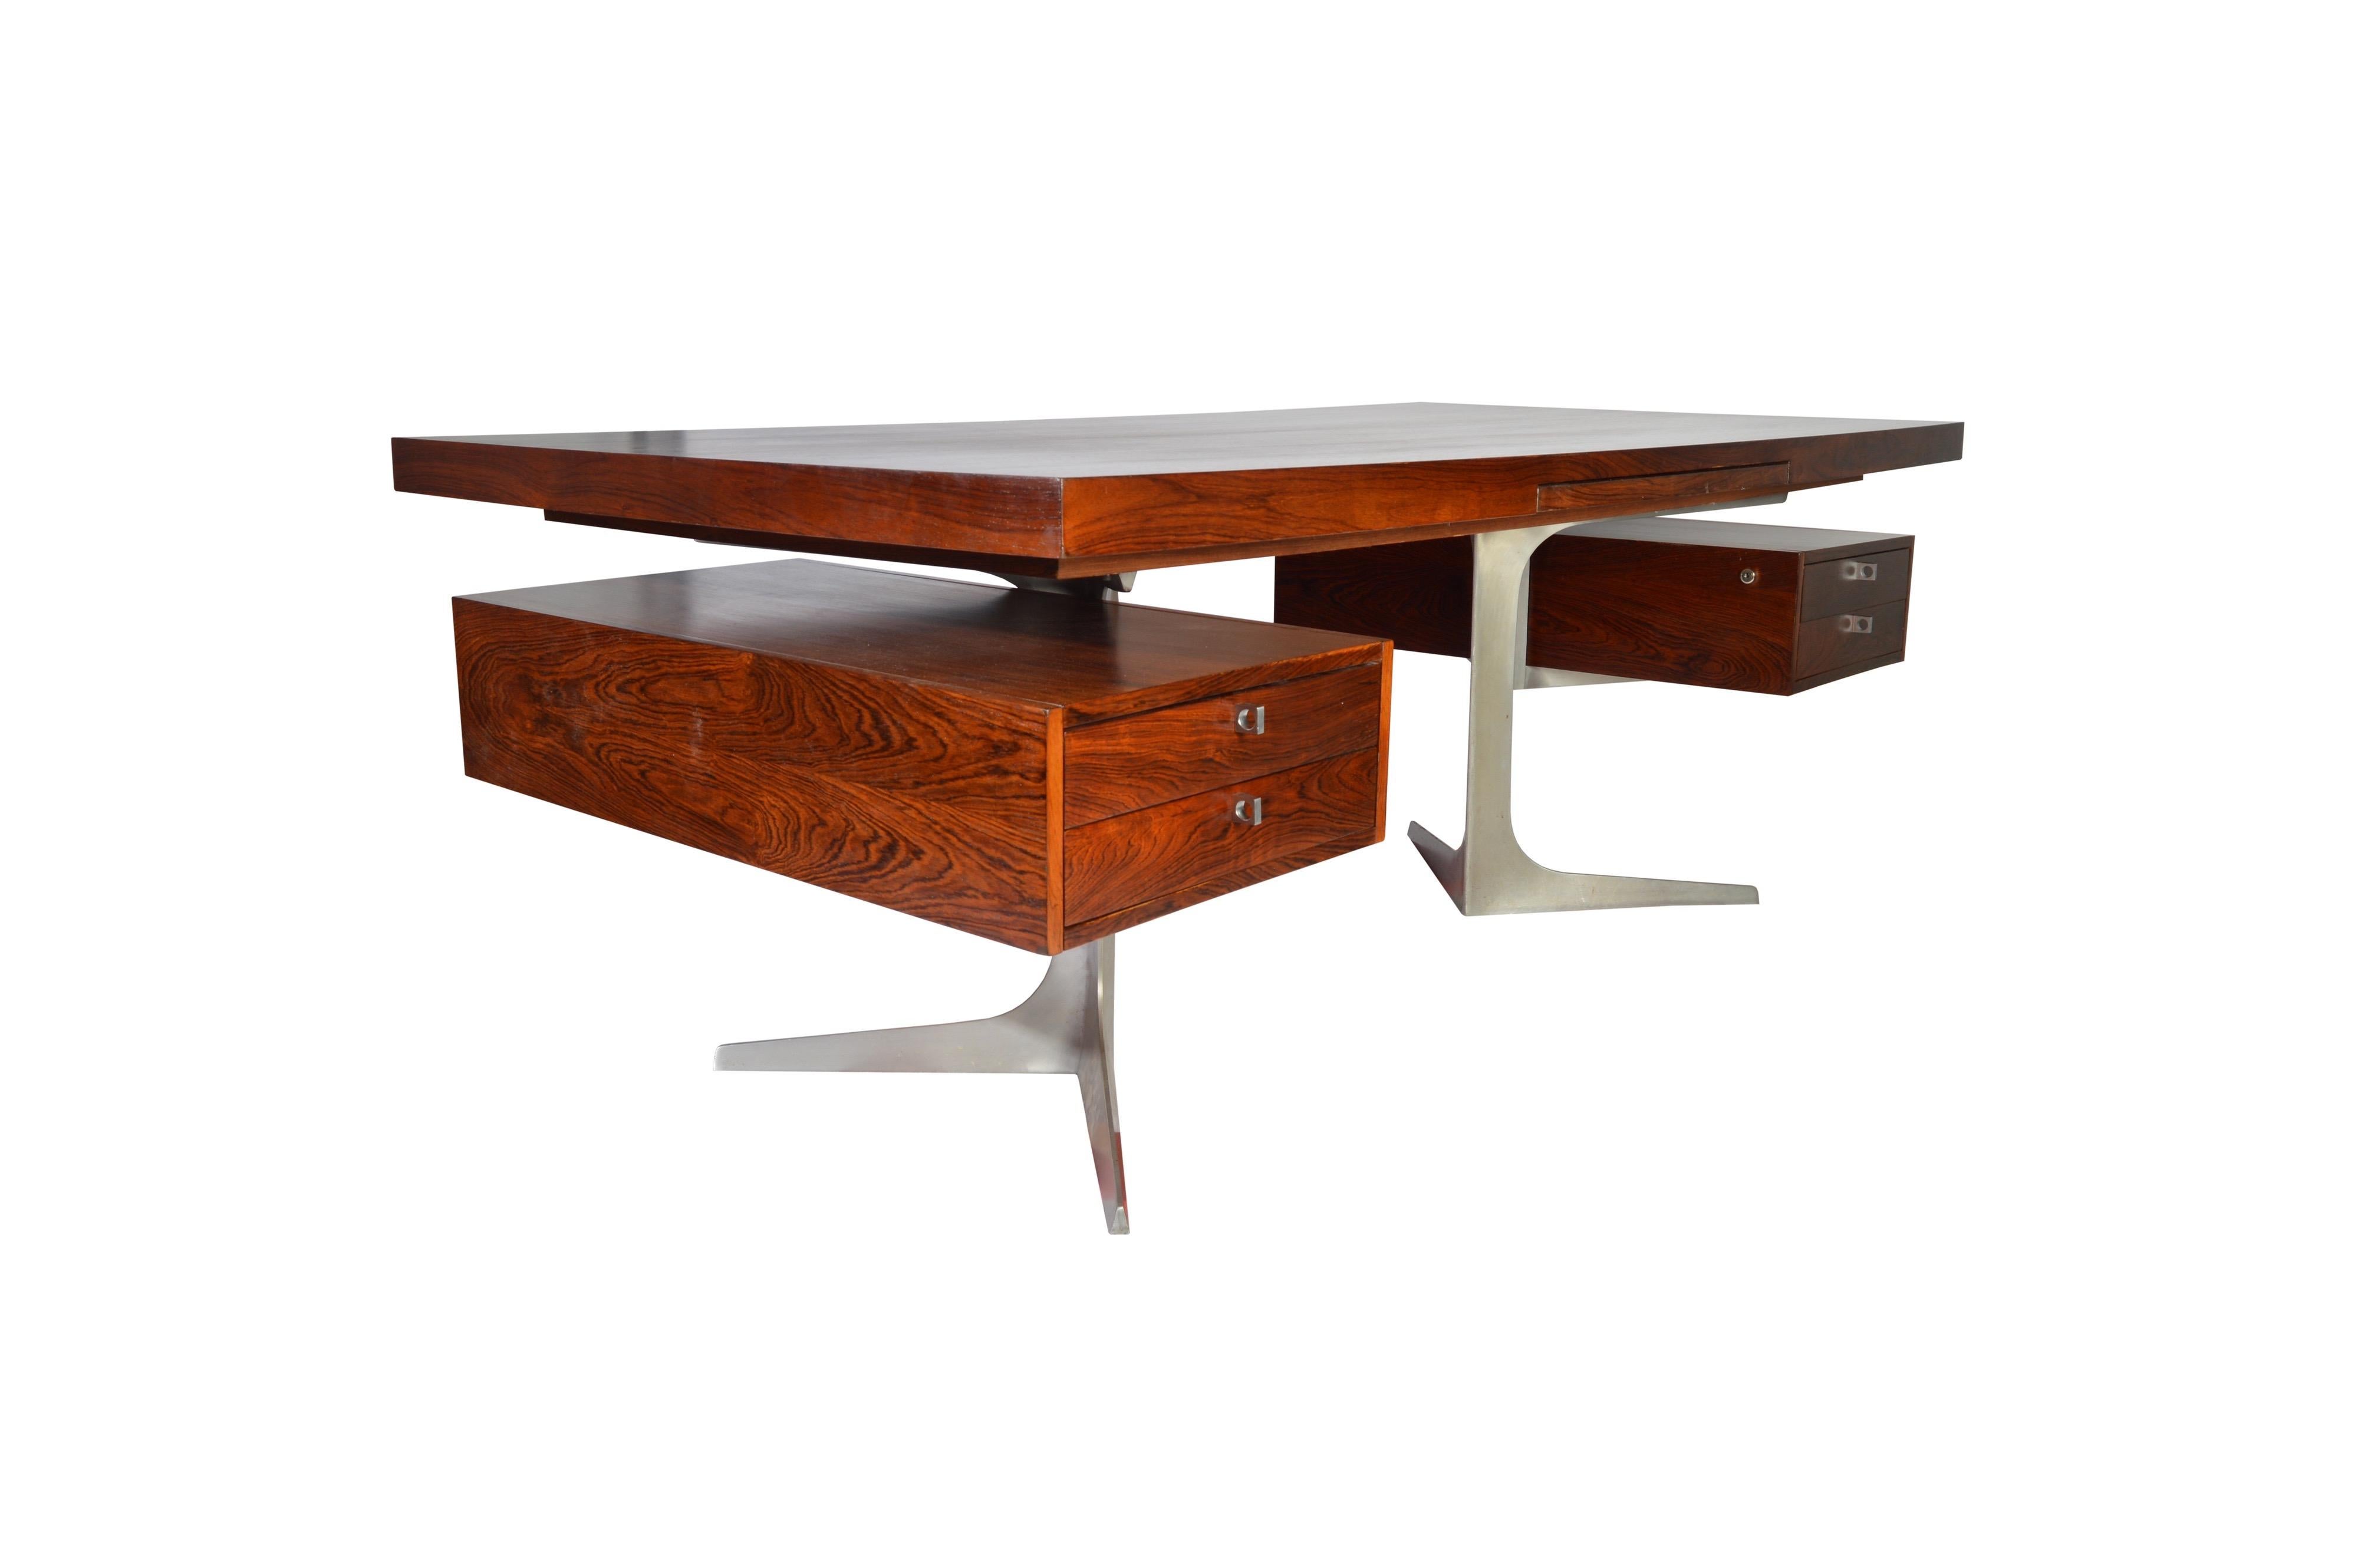 Rare Herbert Hirche execuive 'Top Series' desk for Christian Holzäpfel, 1967
Very good condition. 
    